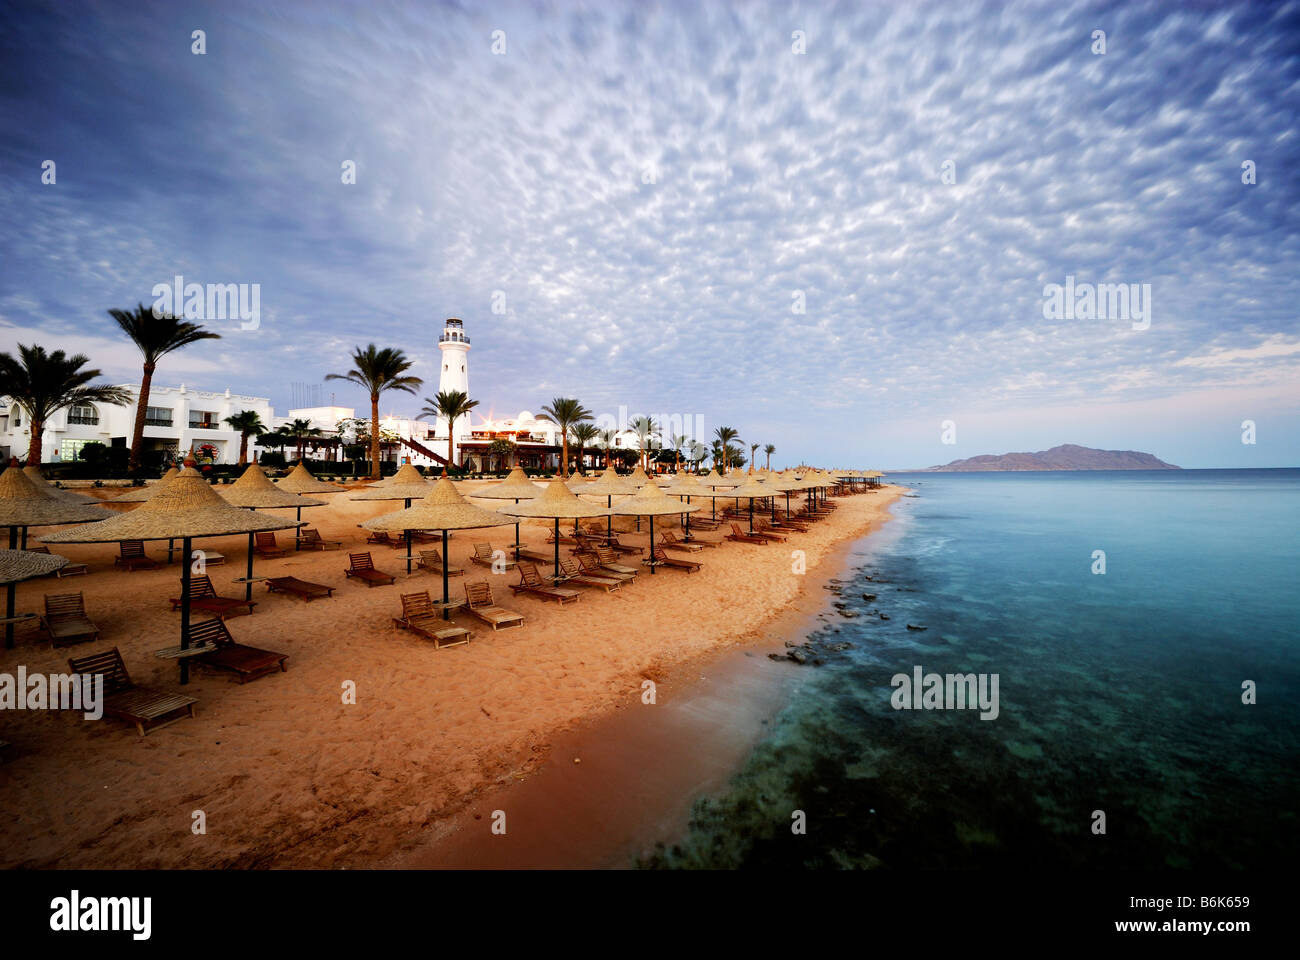 beautiful beach and ocean in sharm el sheikh egypt Stock Photo